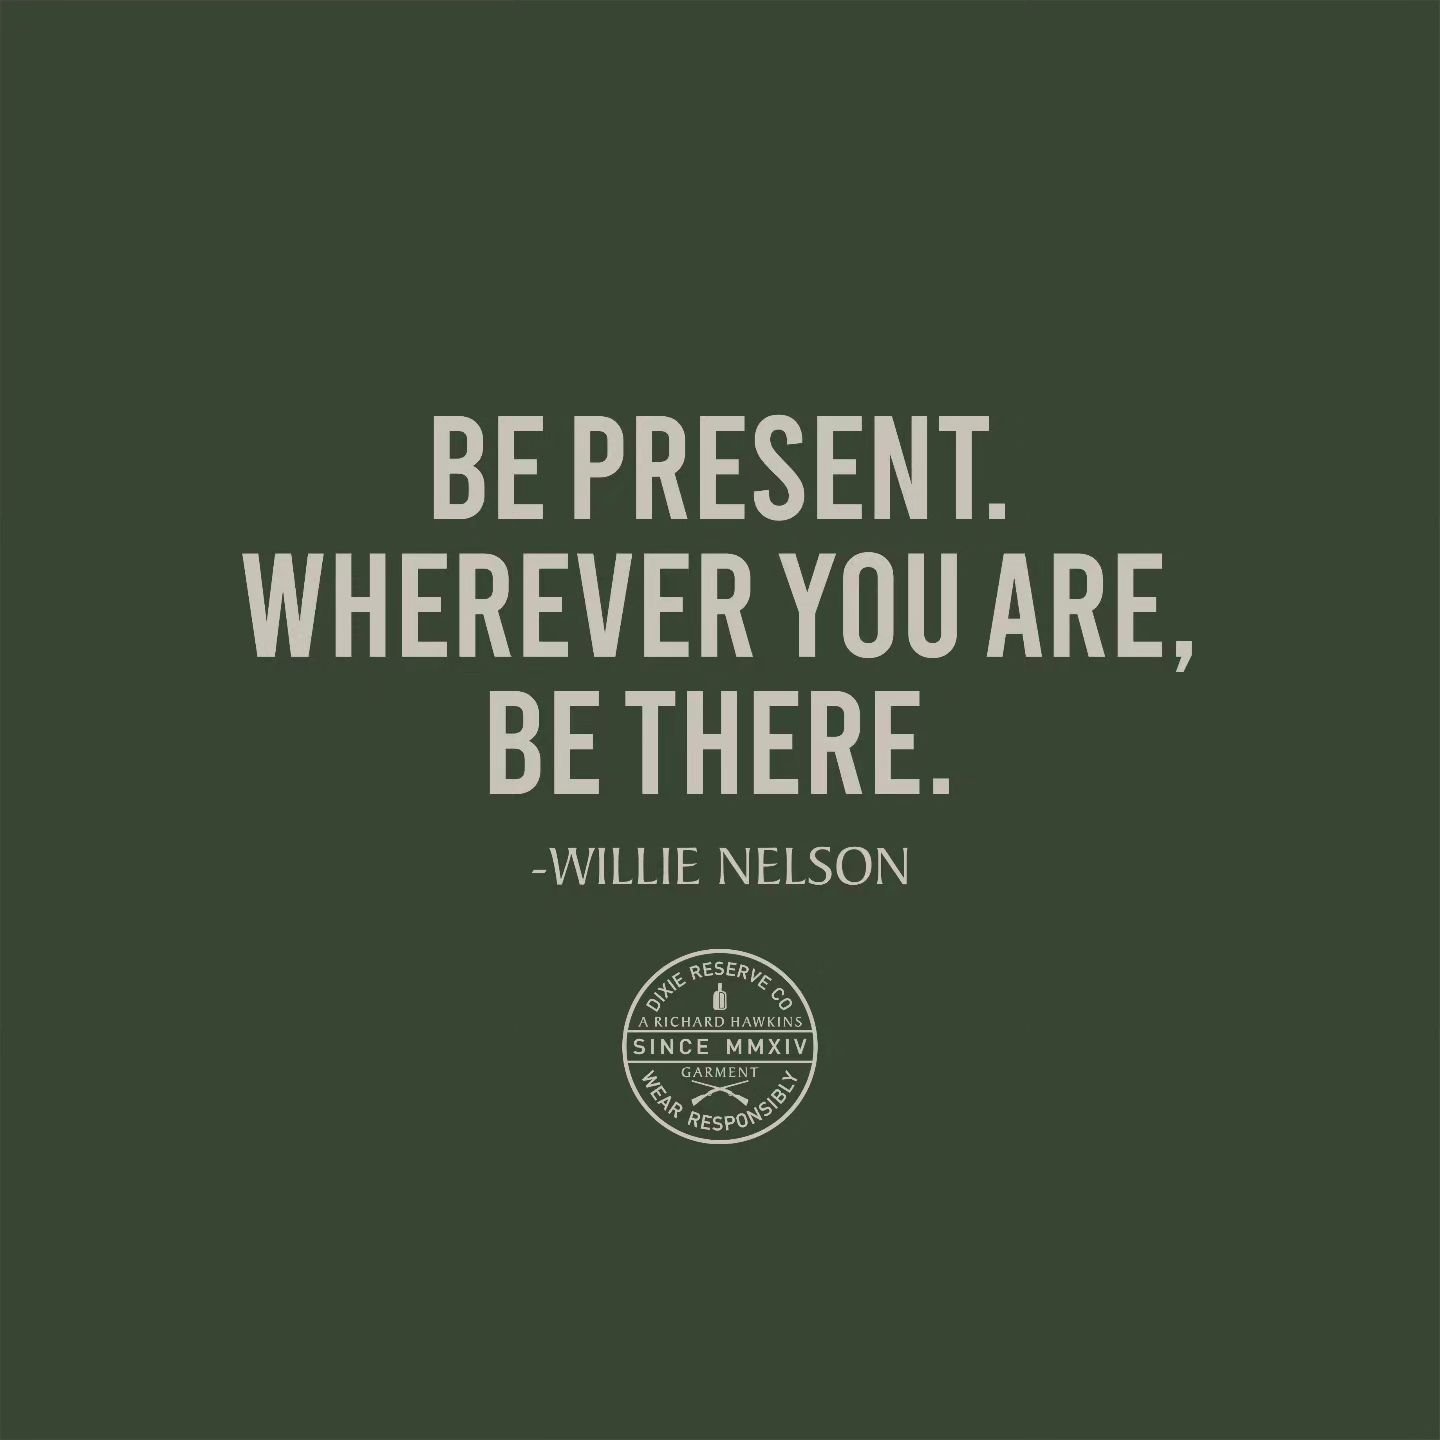 Willie Wisdom.
.
.
.
.
#willienelson #bepresent #outlawcountry #quotestoliveby #qotd #quotes #quote #quoteme #wordsofwisdom #wednesdaywisdom #quoteoftheday #countrymusic #bewhereyourfeetare